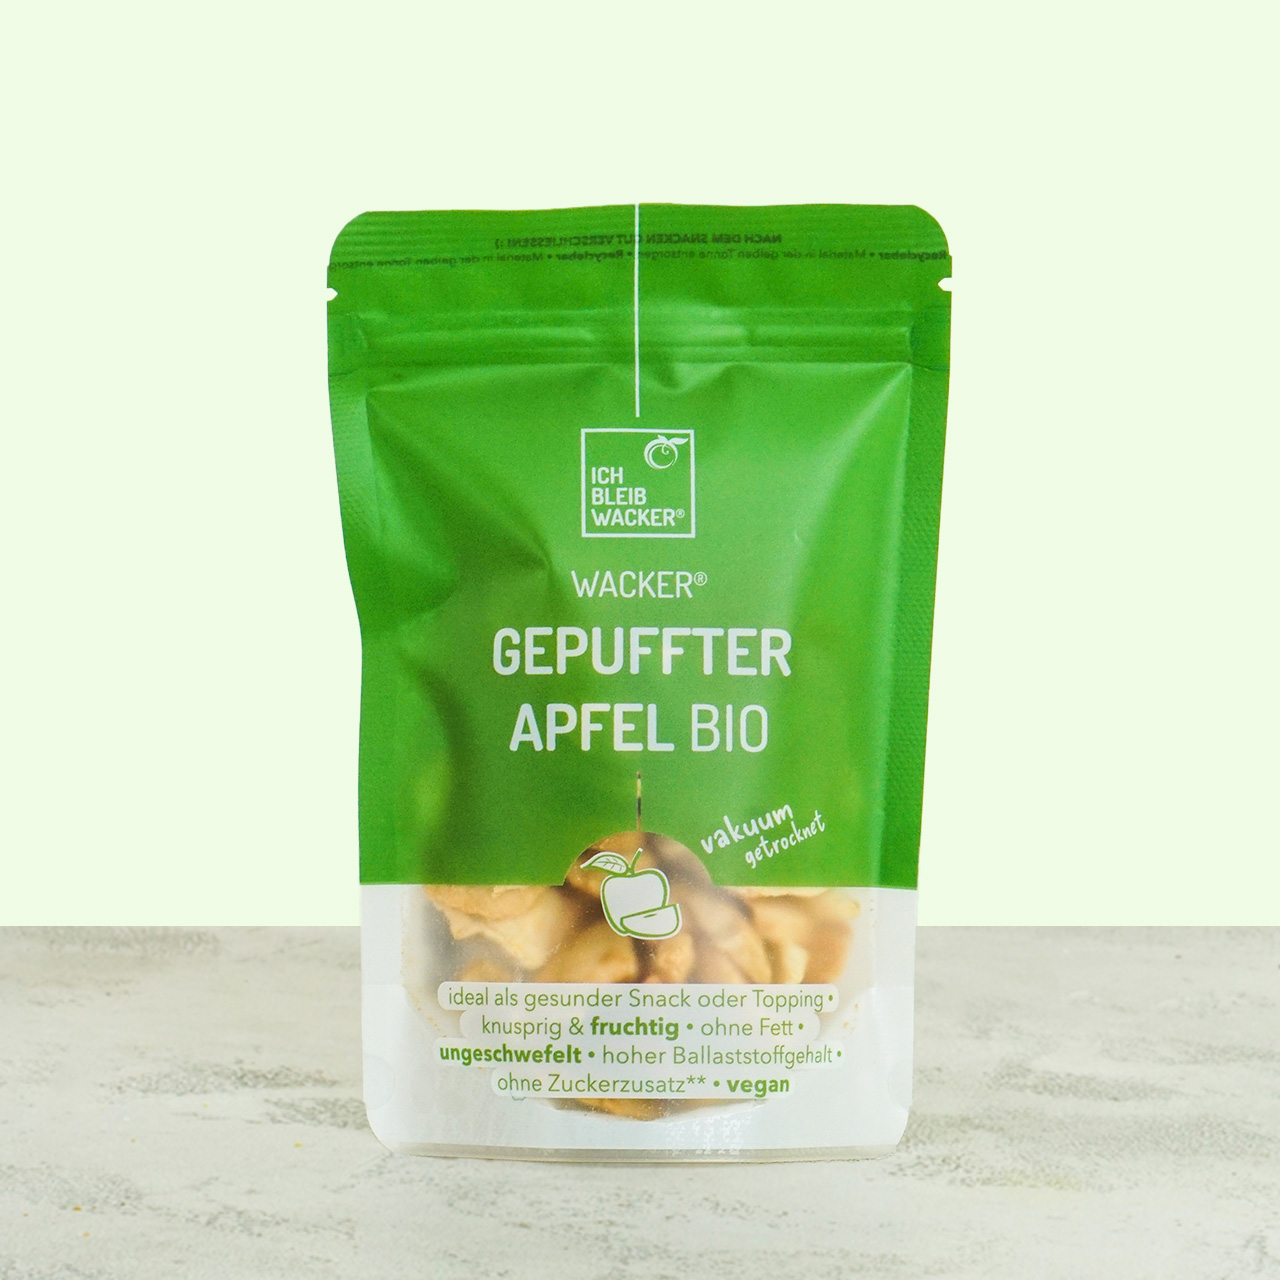 Wacker Gepuffter Apfel Bio, 30g